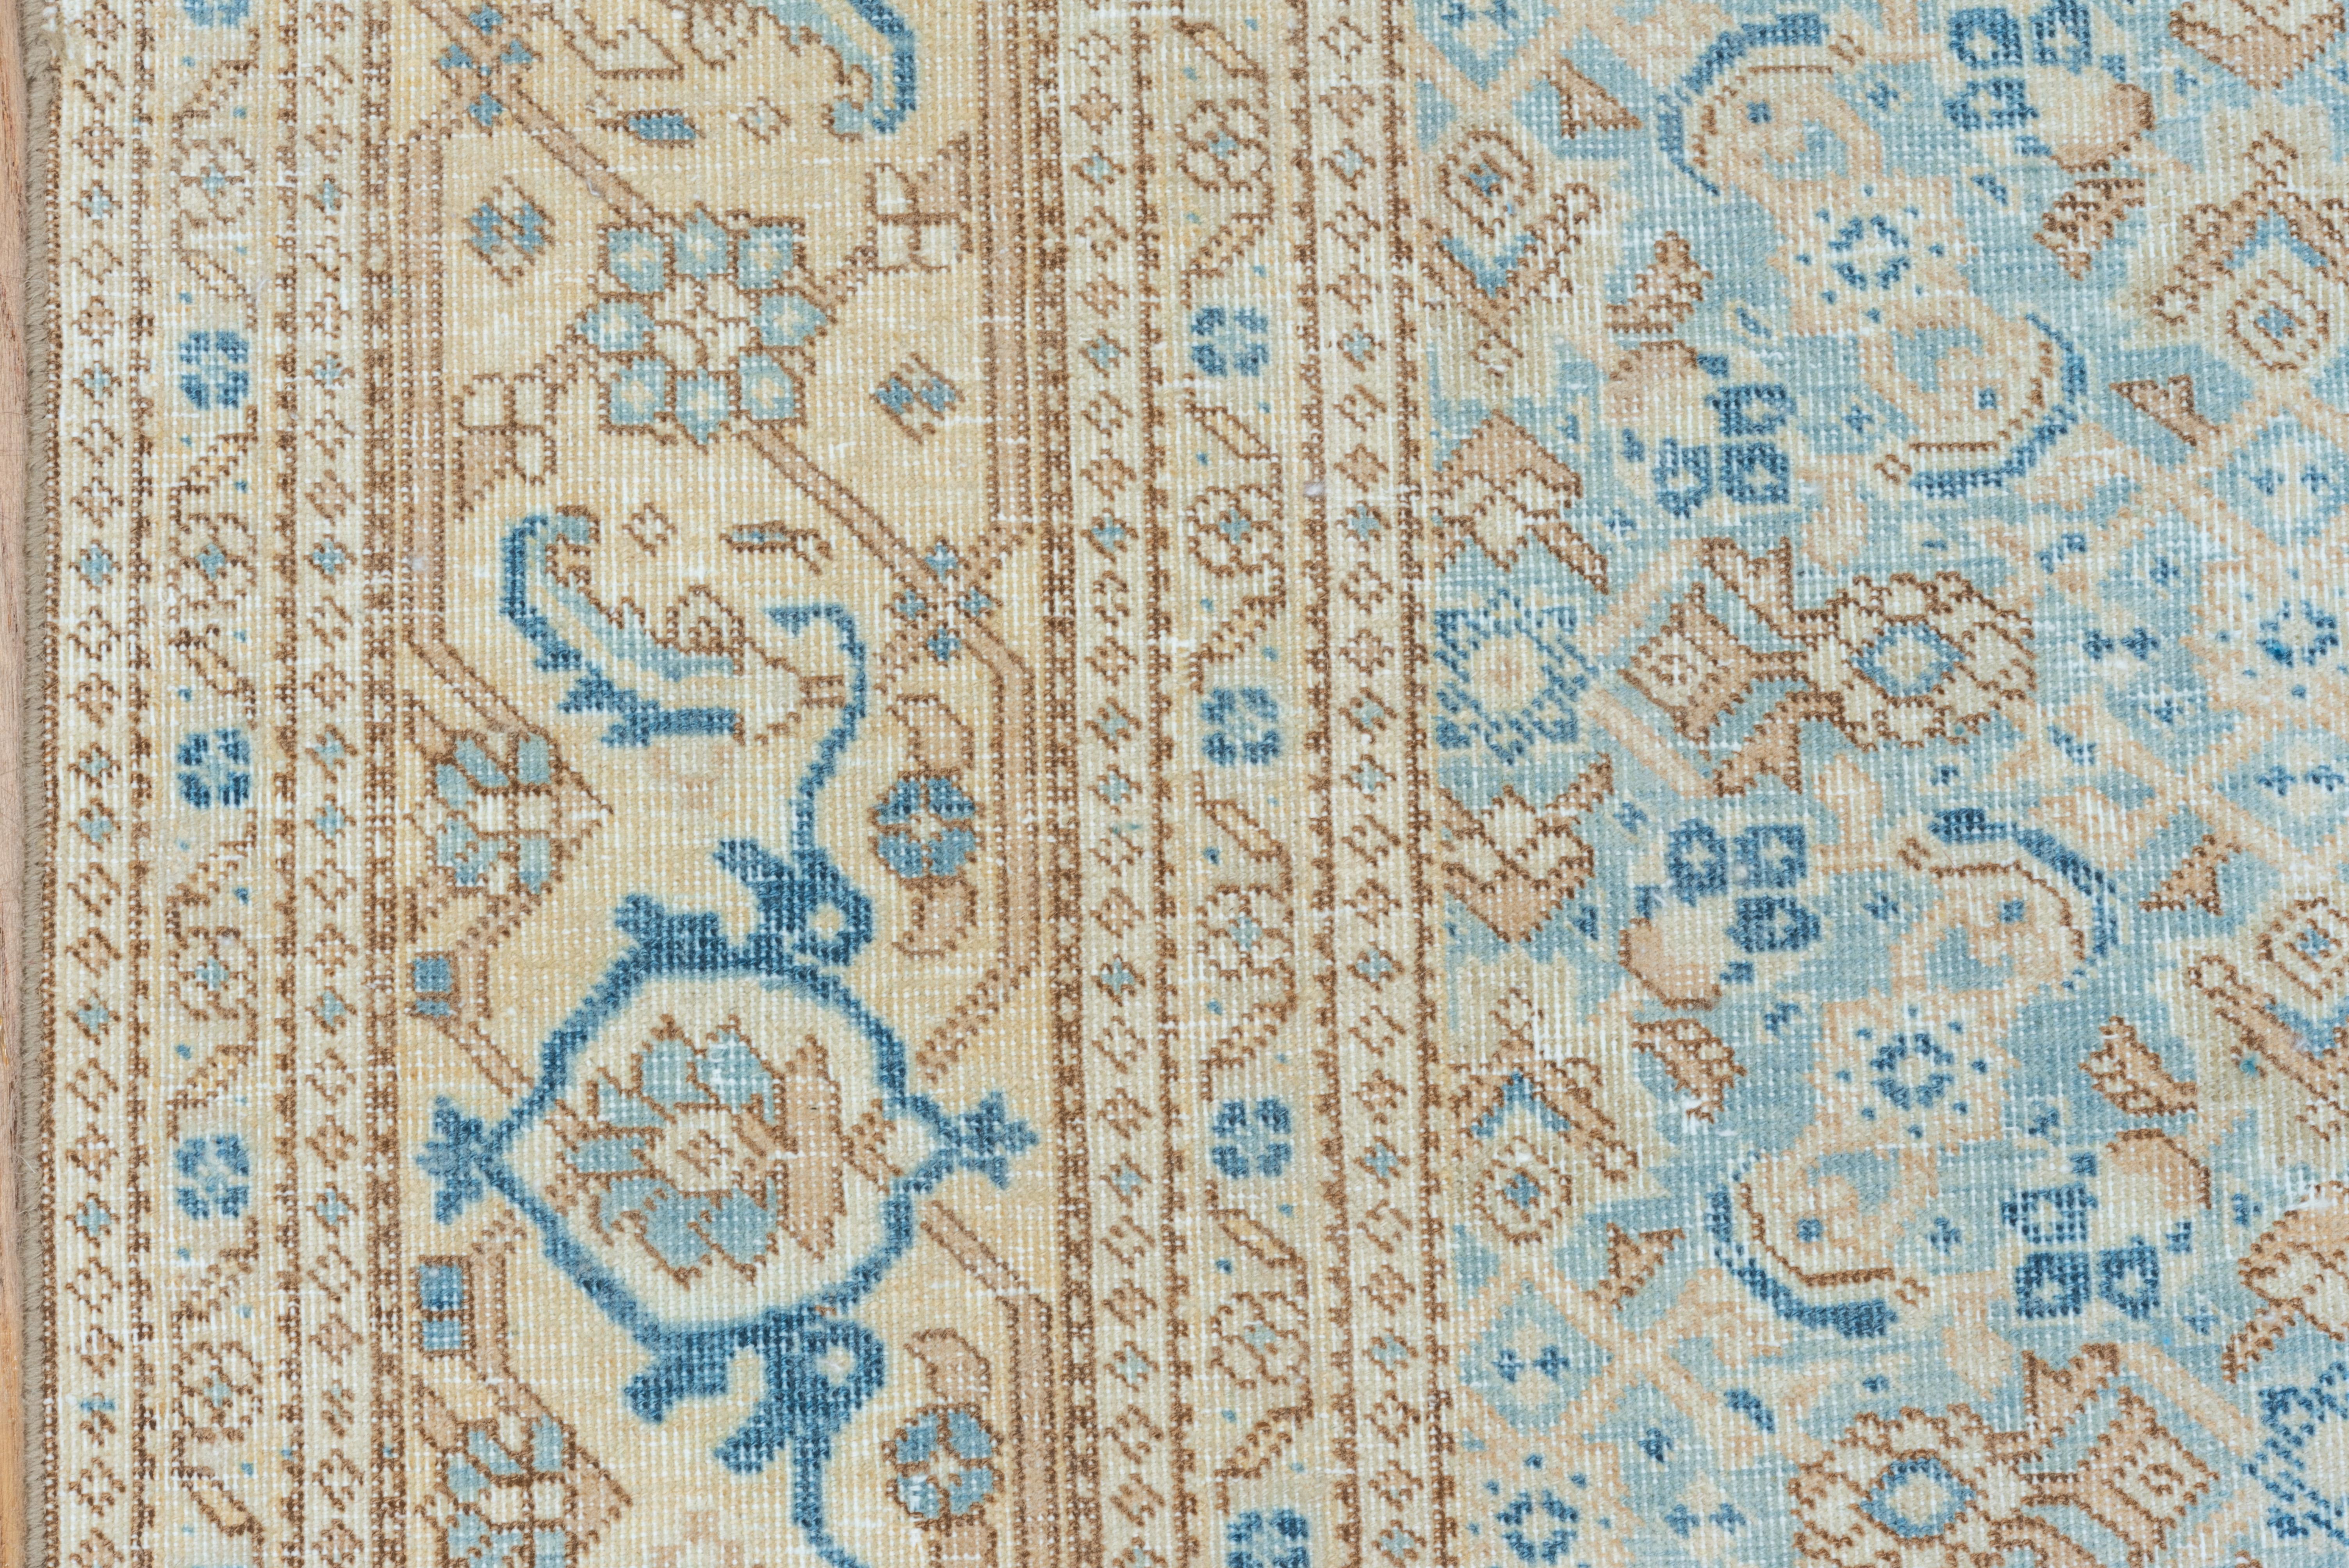 Wool Antique Persian Tabriz Rug, Light Blue Herati Field, Innter Royal blue Medallion For Sale